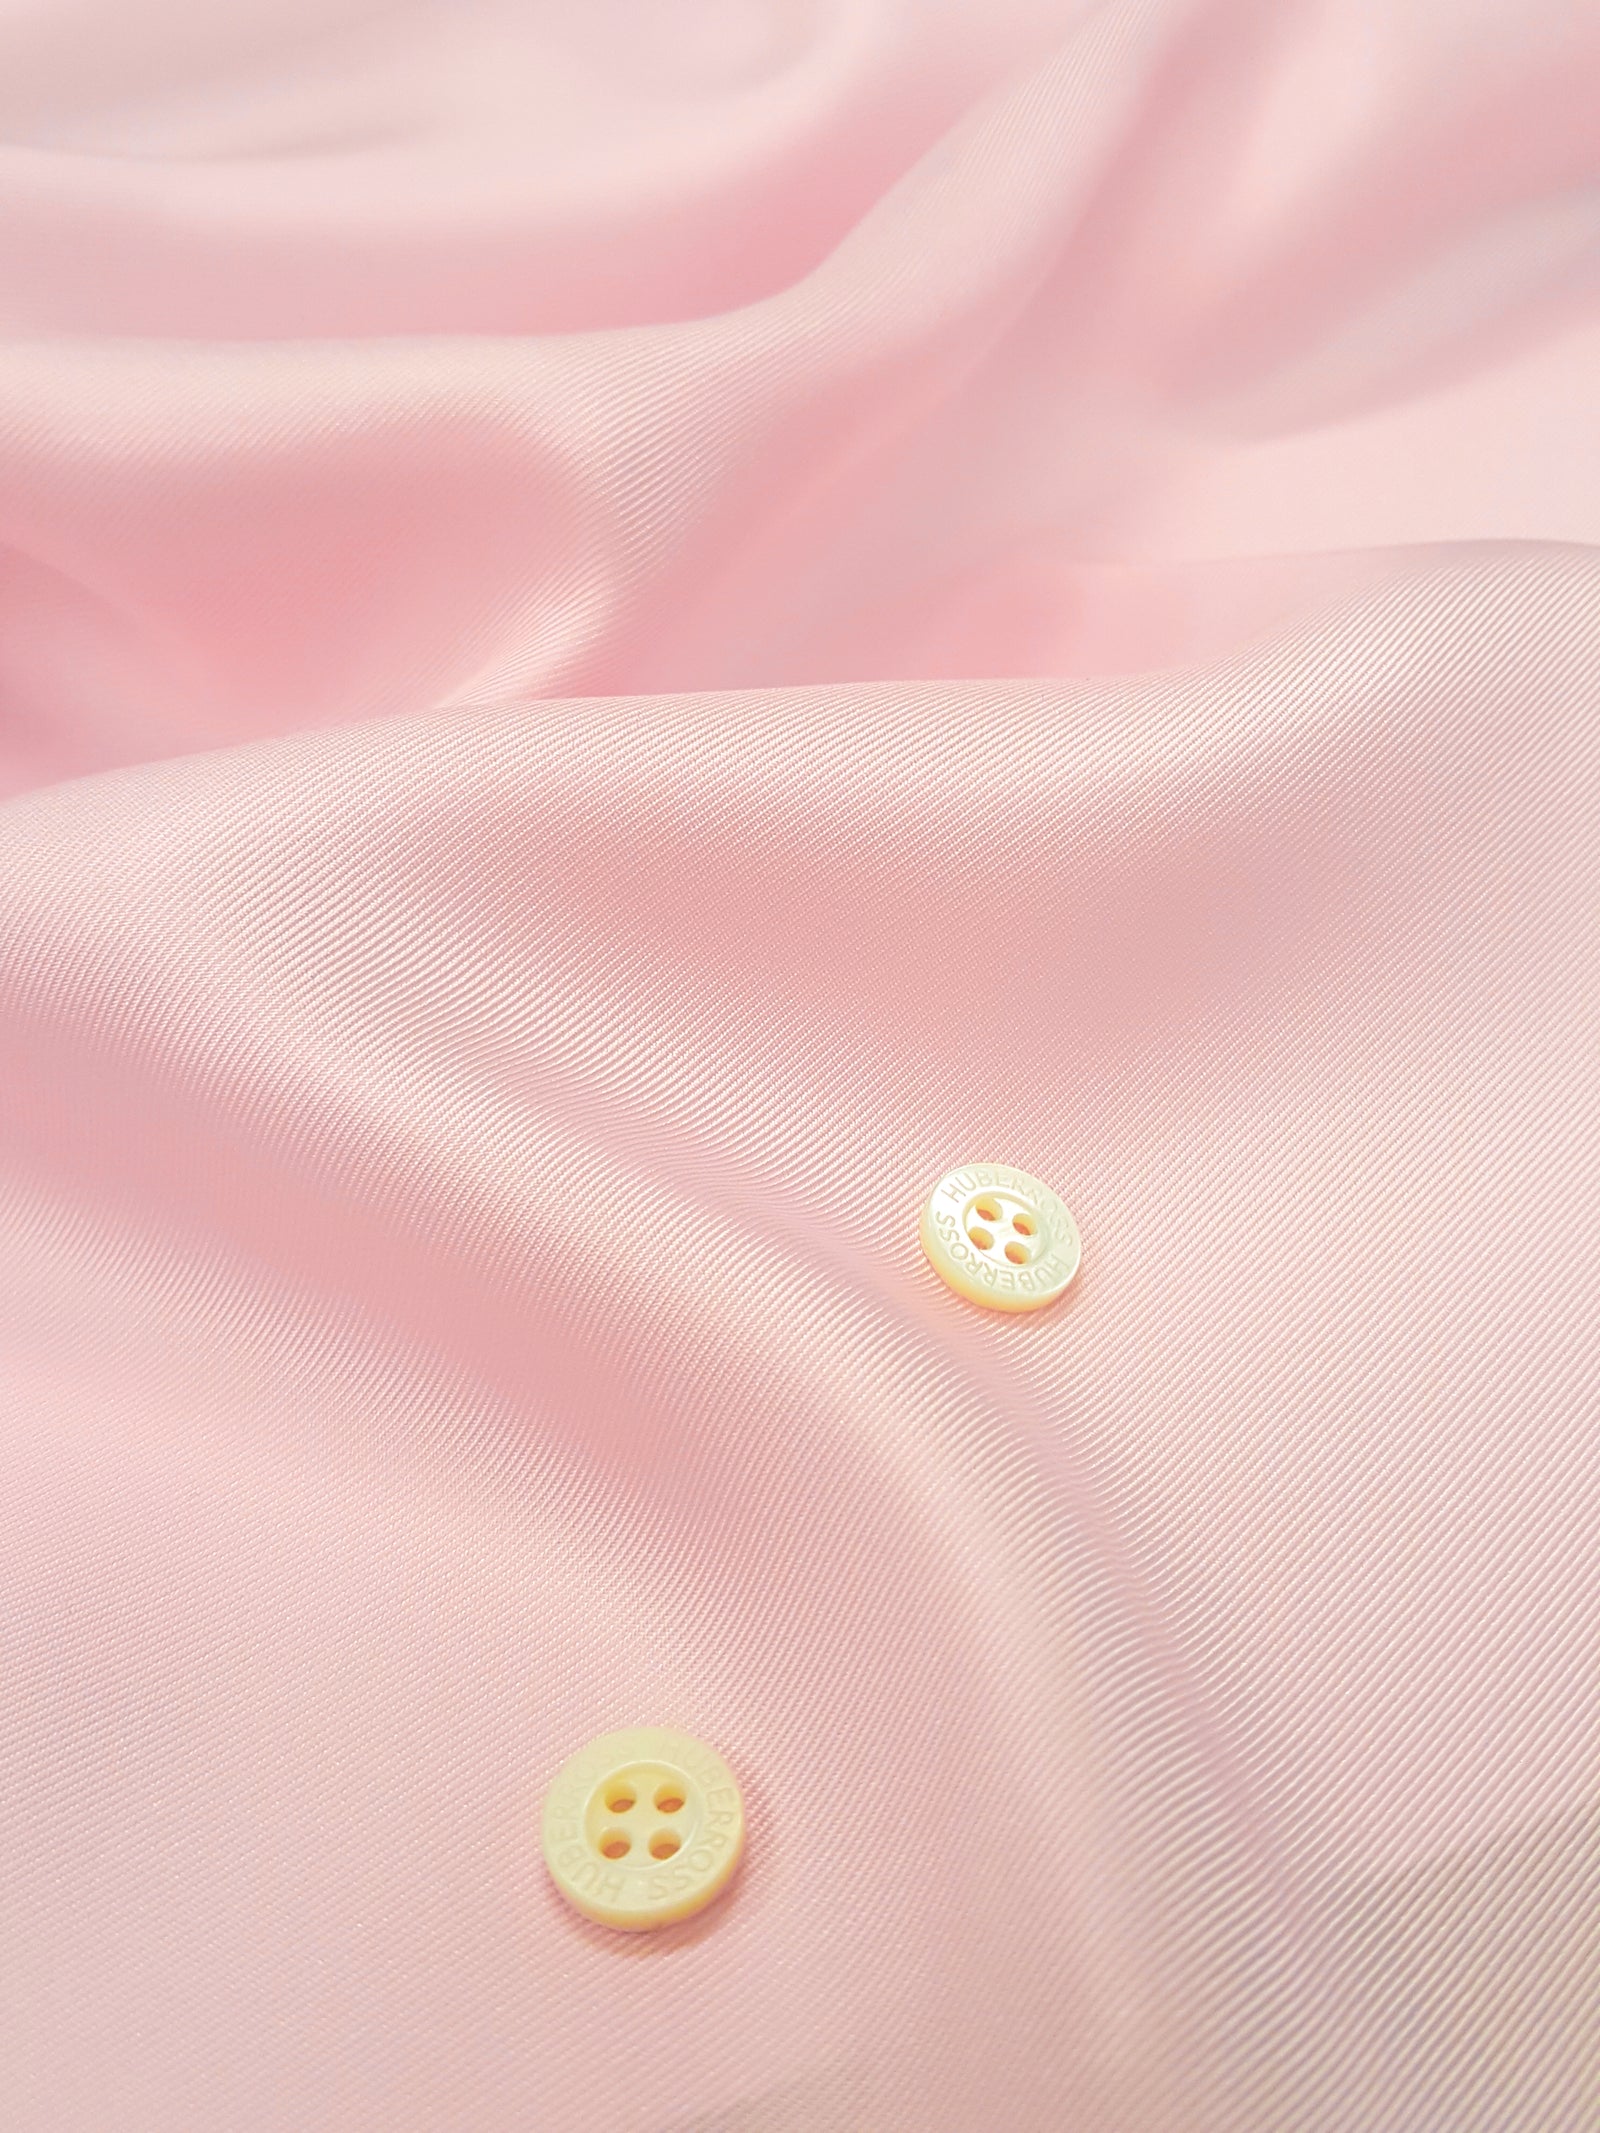 Silk Satin Fabric: 100% Silk Fabrics from Italy, SKU 00074616 at